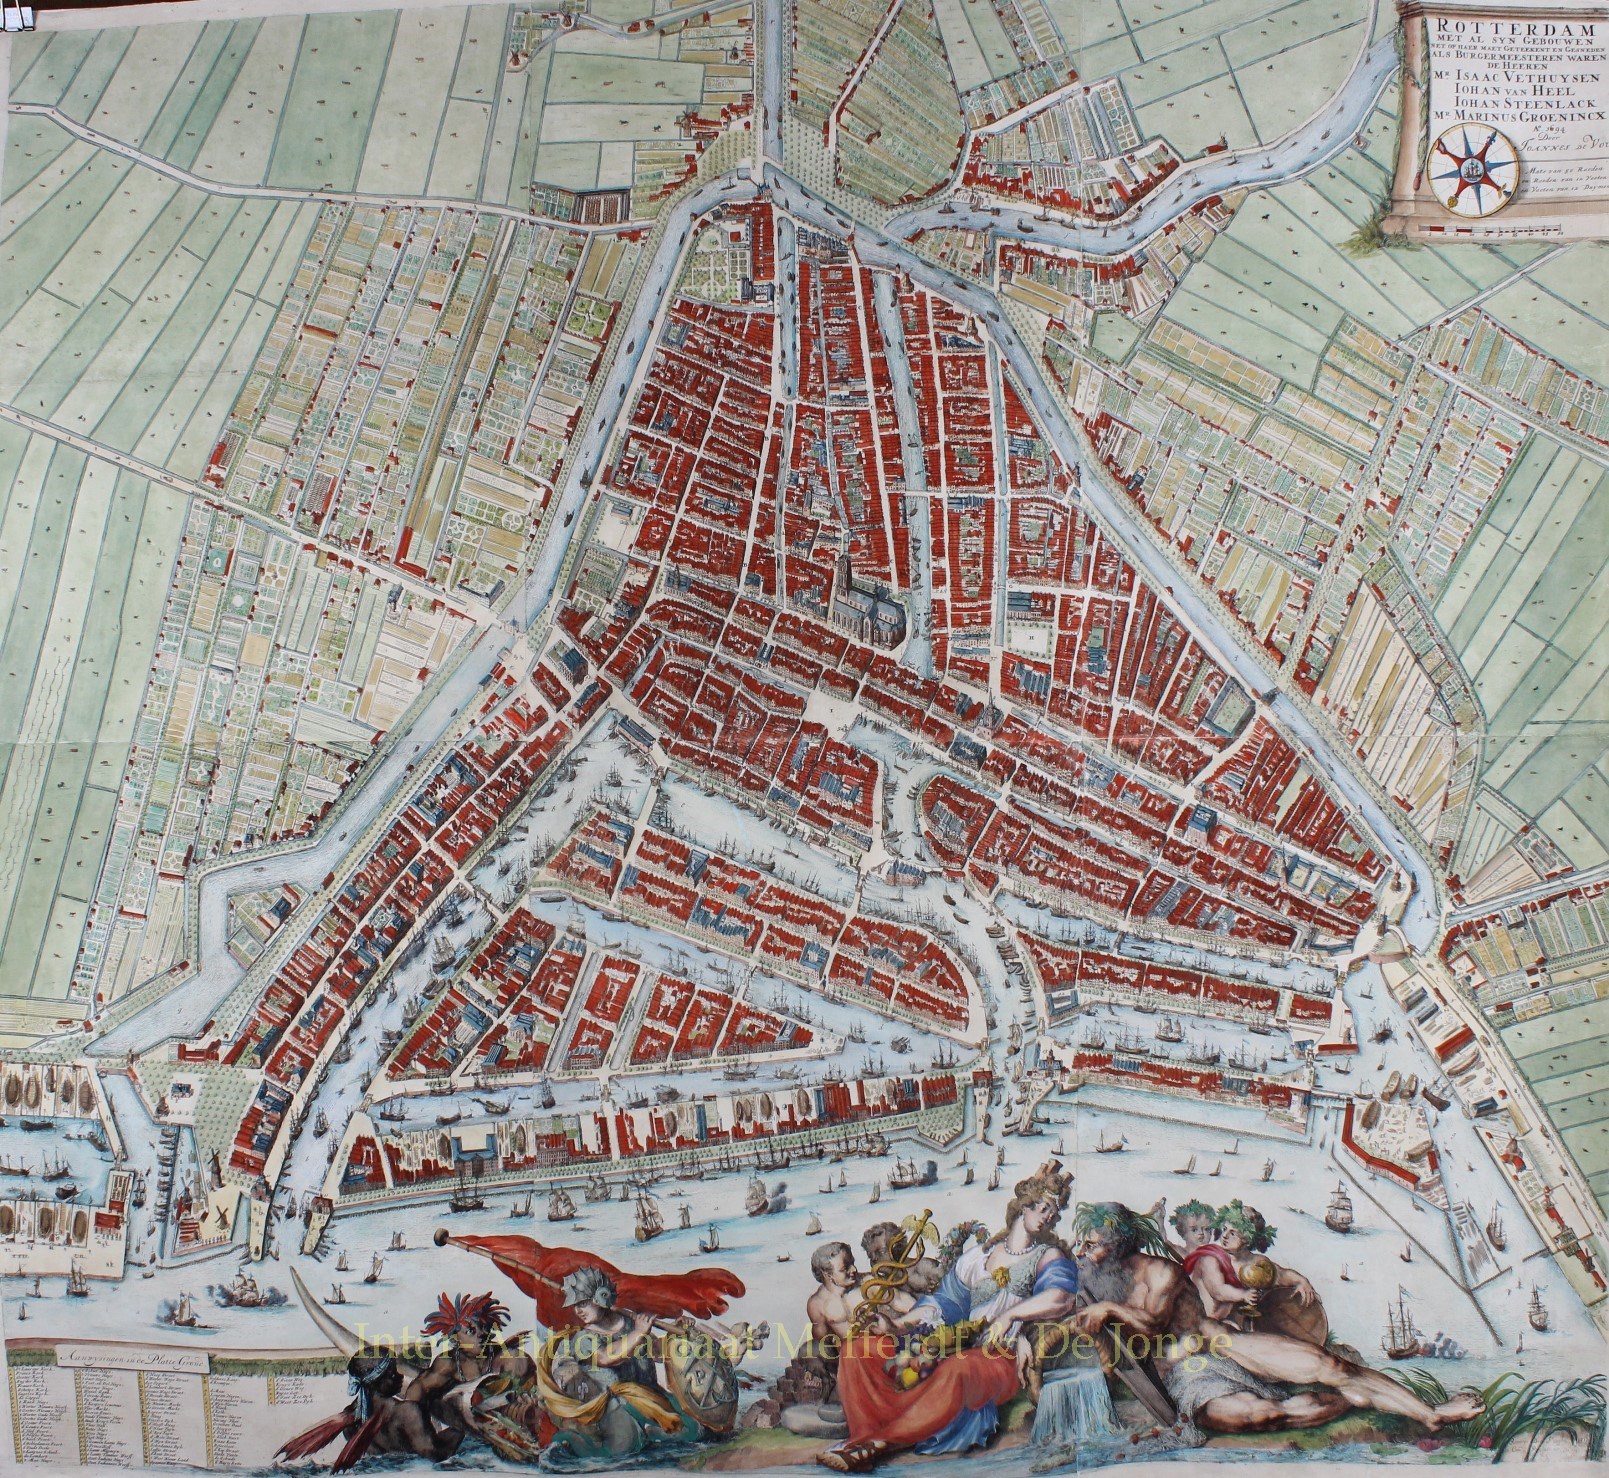 Hooghe-- Romeijn de - Wall map of Rotterdam - Johannes de Vou + Romeijn de Hooghe, 1694